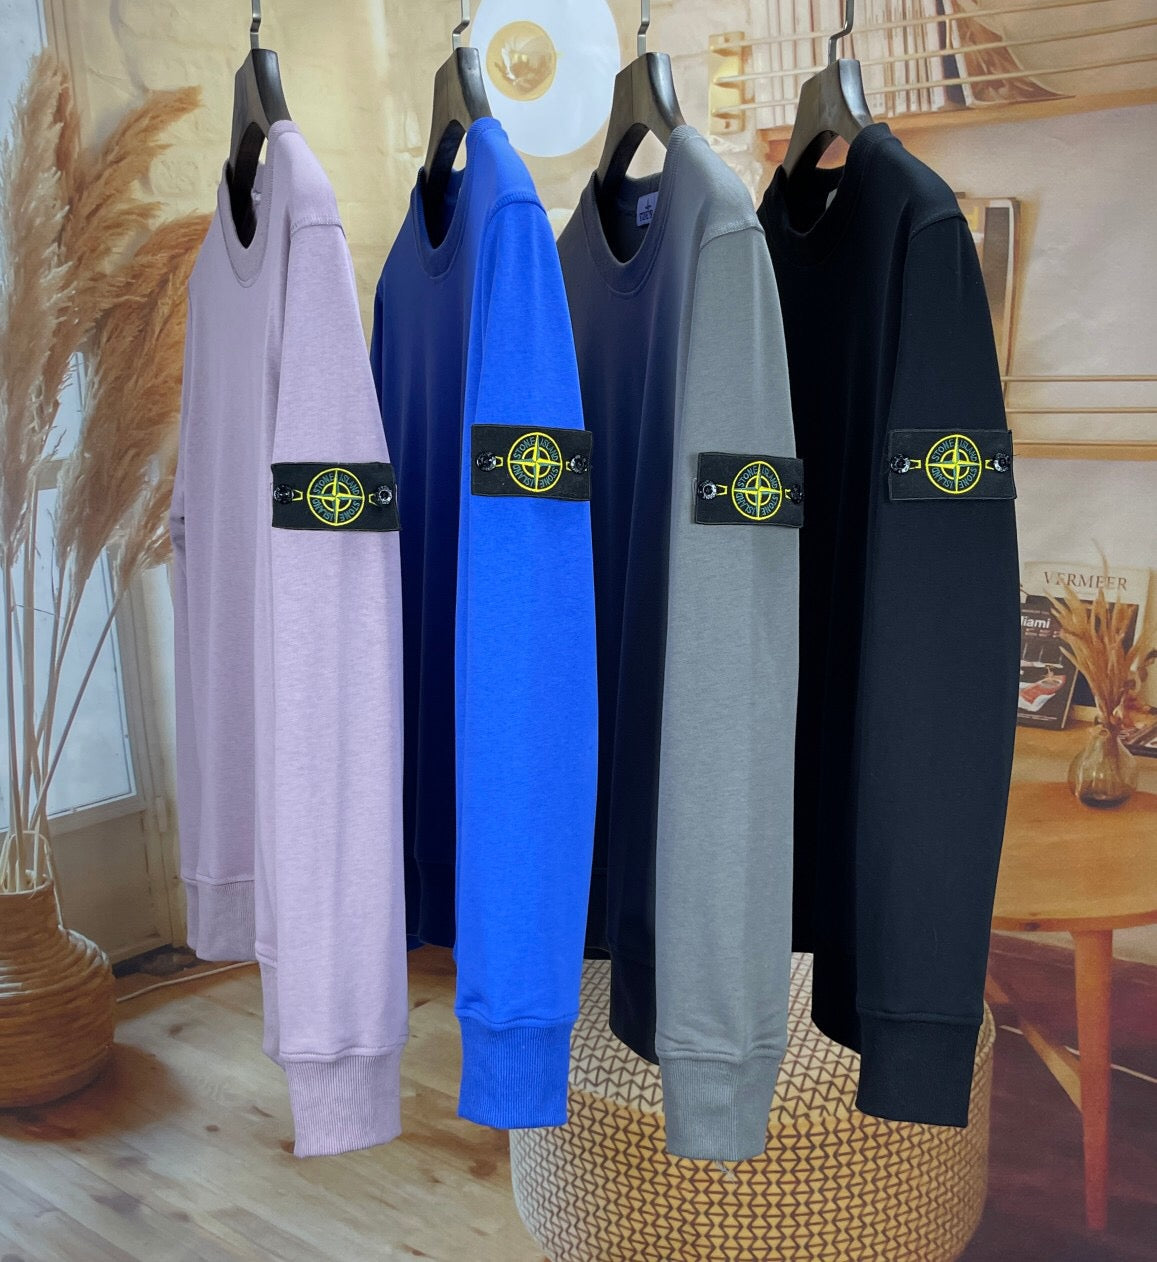 SSS - Long Sleeve Badge Sweatshirt - Stone Streetwear Studio | Timeless Clothing